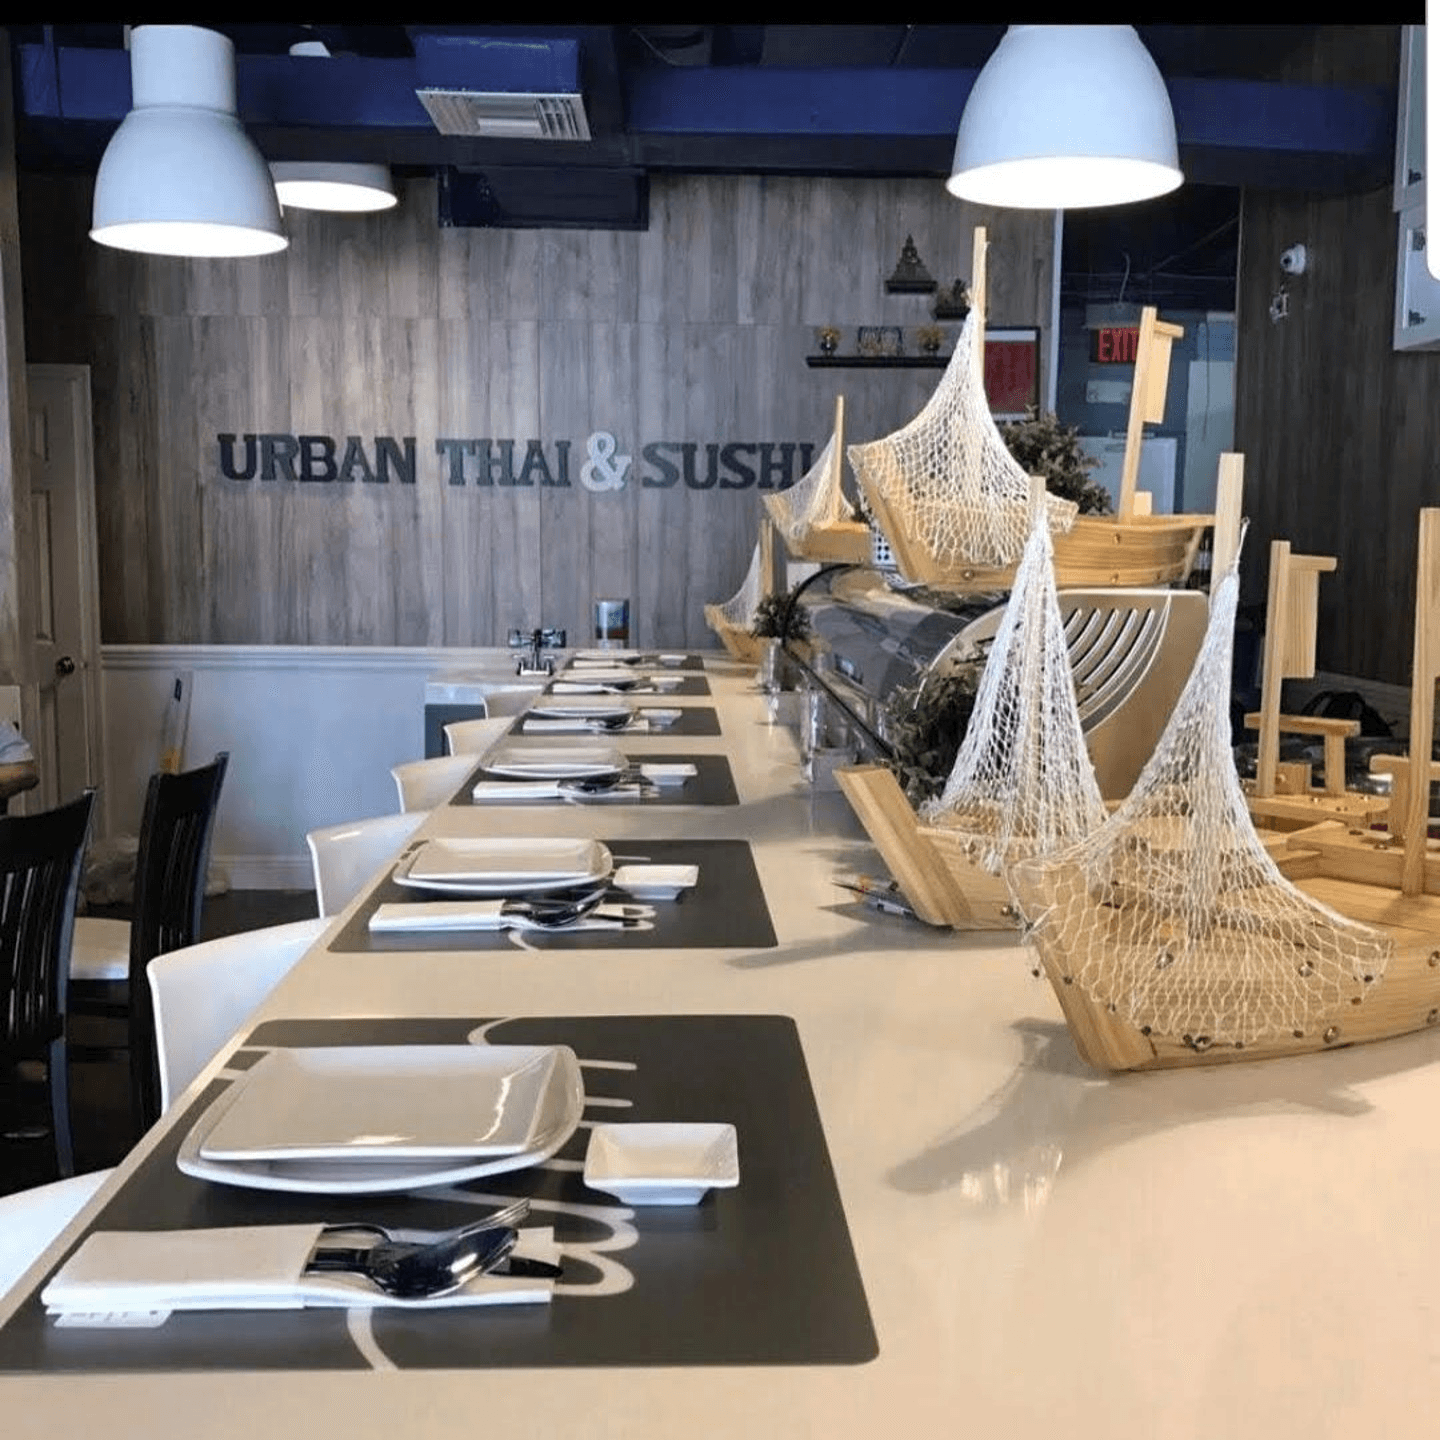 Welcome to Urban Thai & Sushi